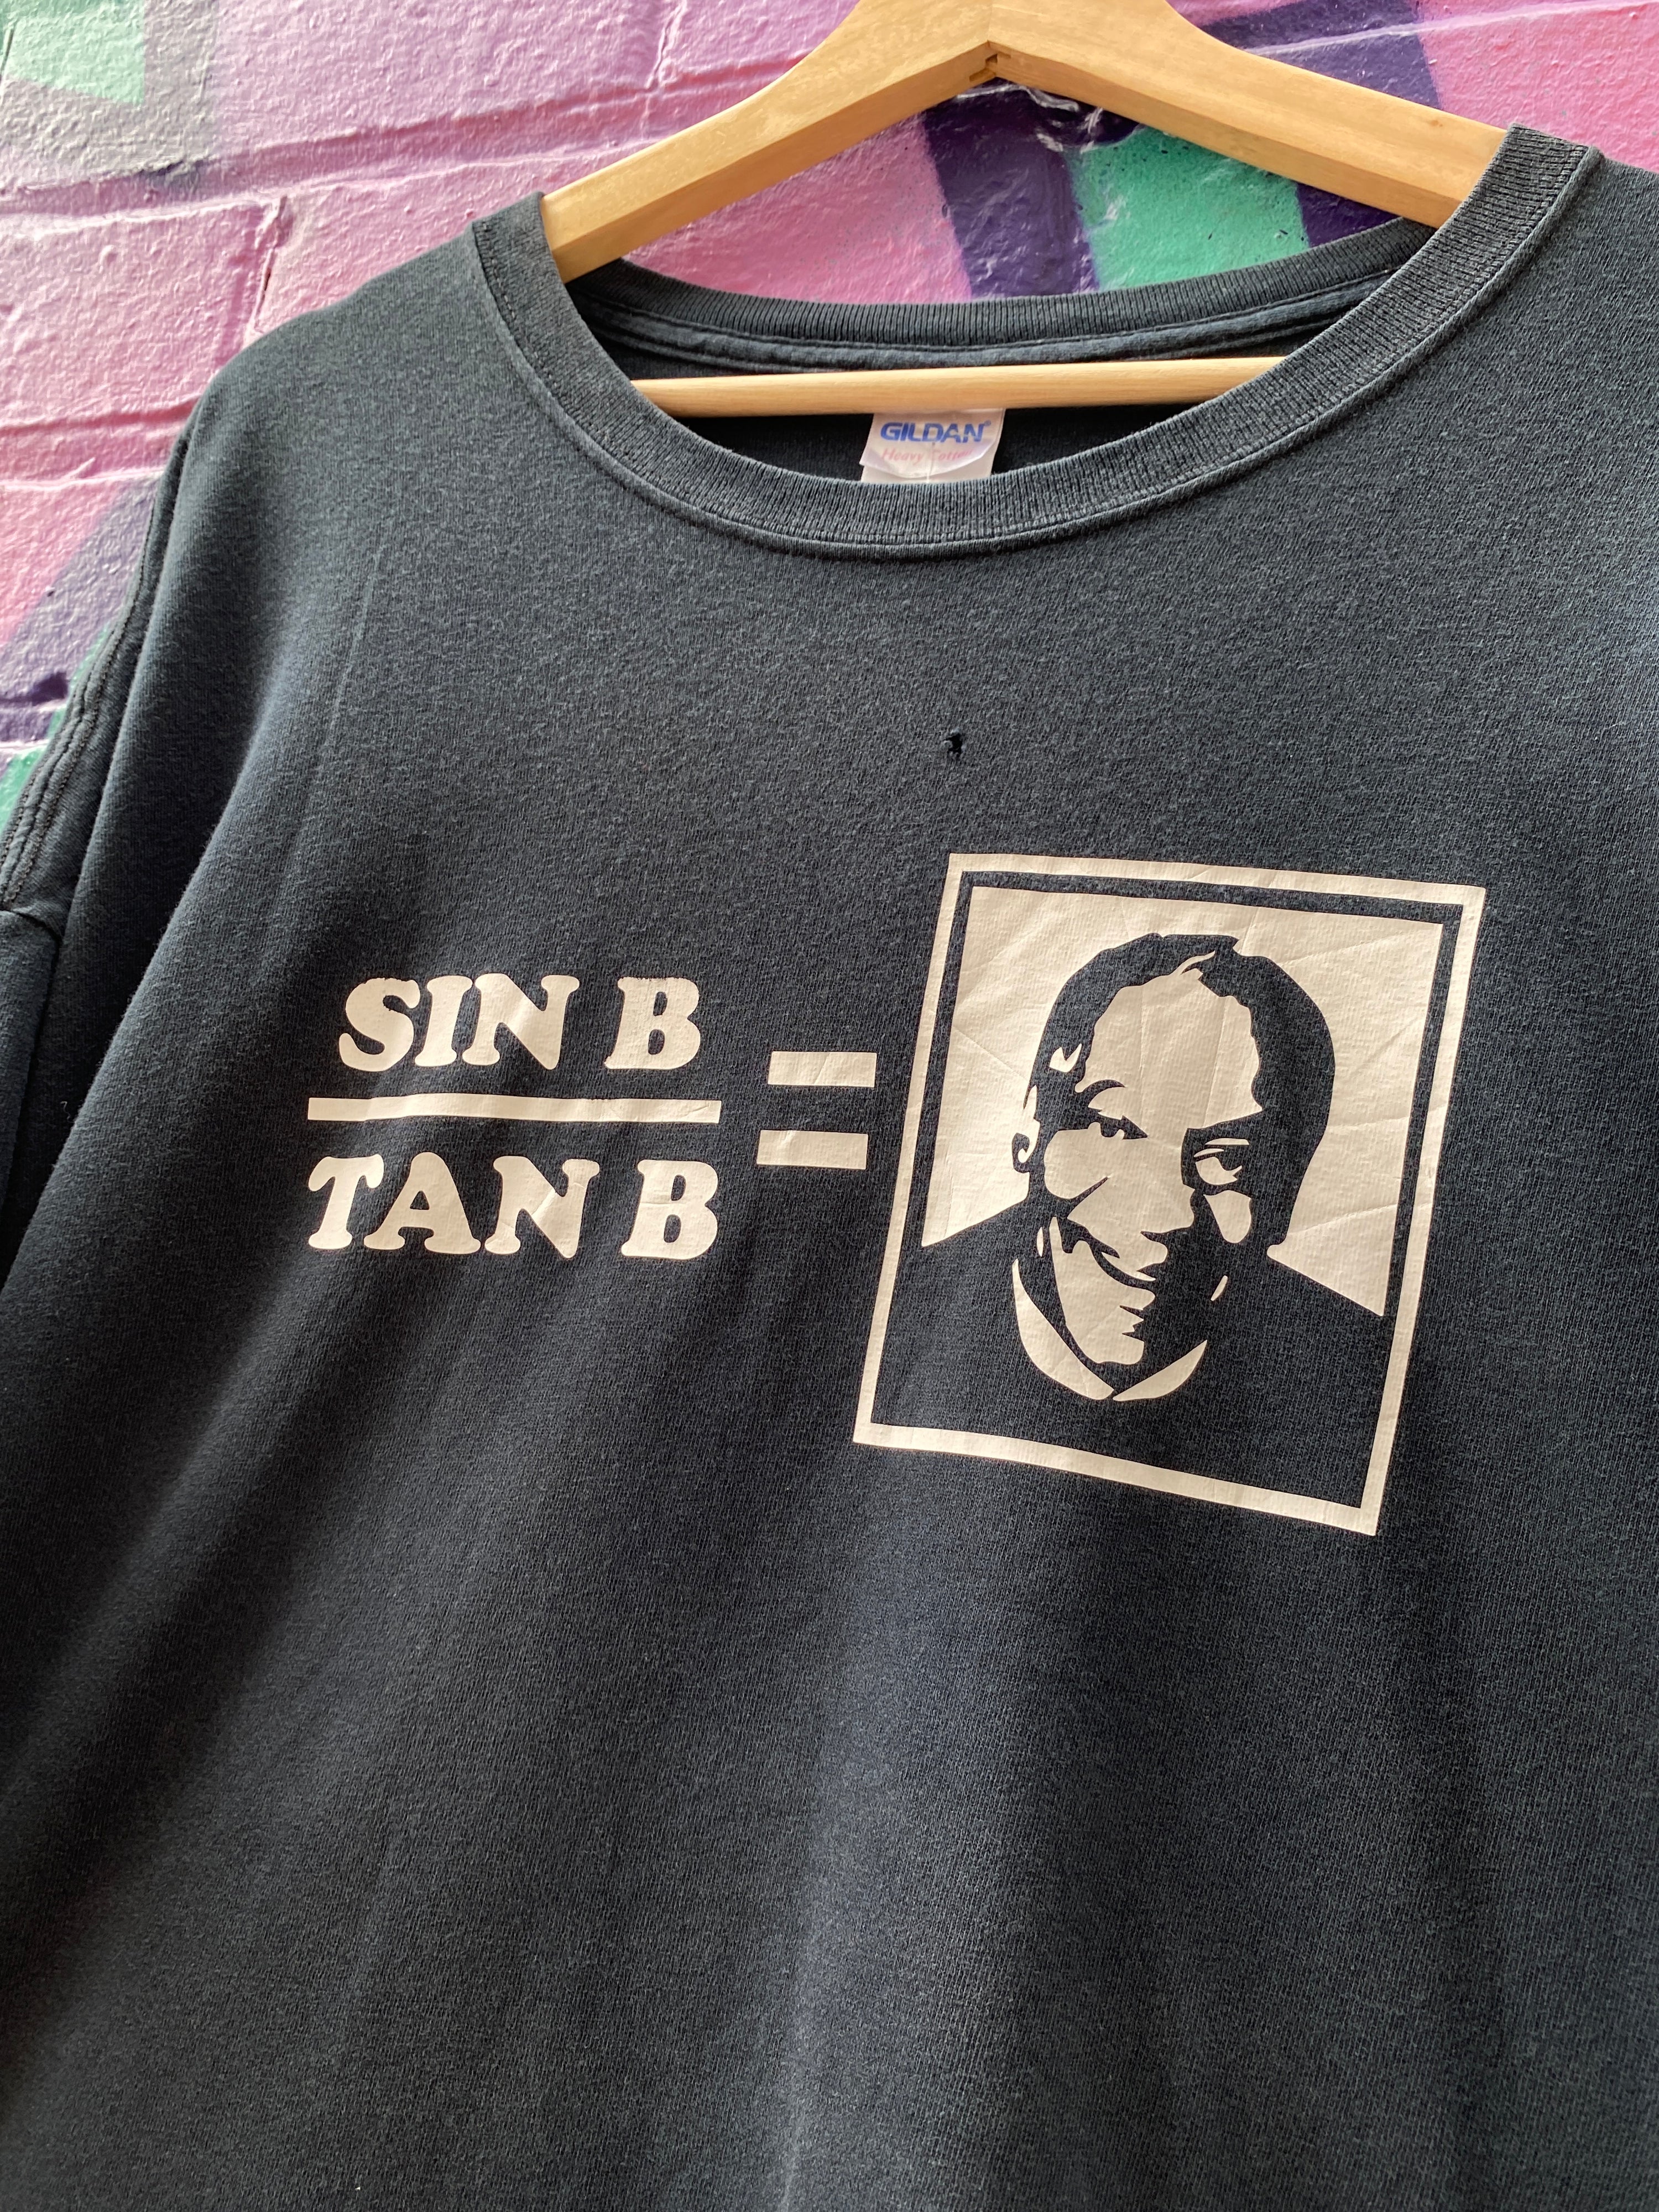 2XL - SinB/TanB = CosB